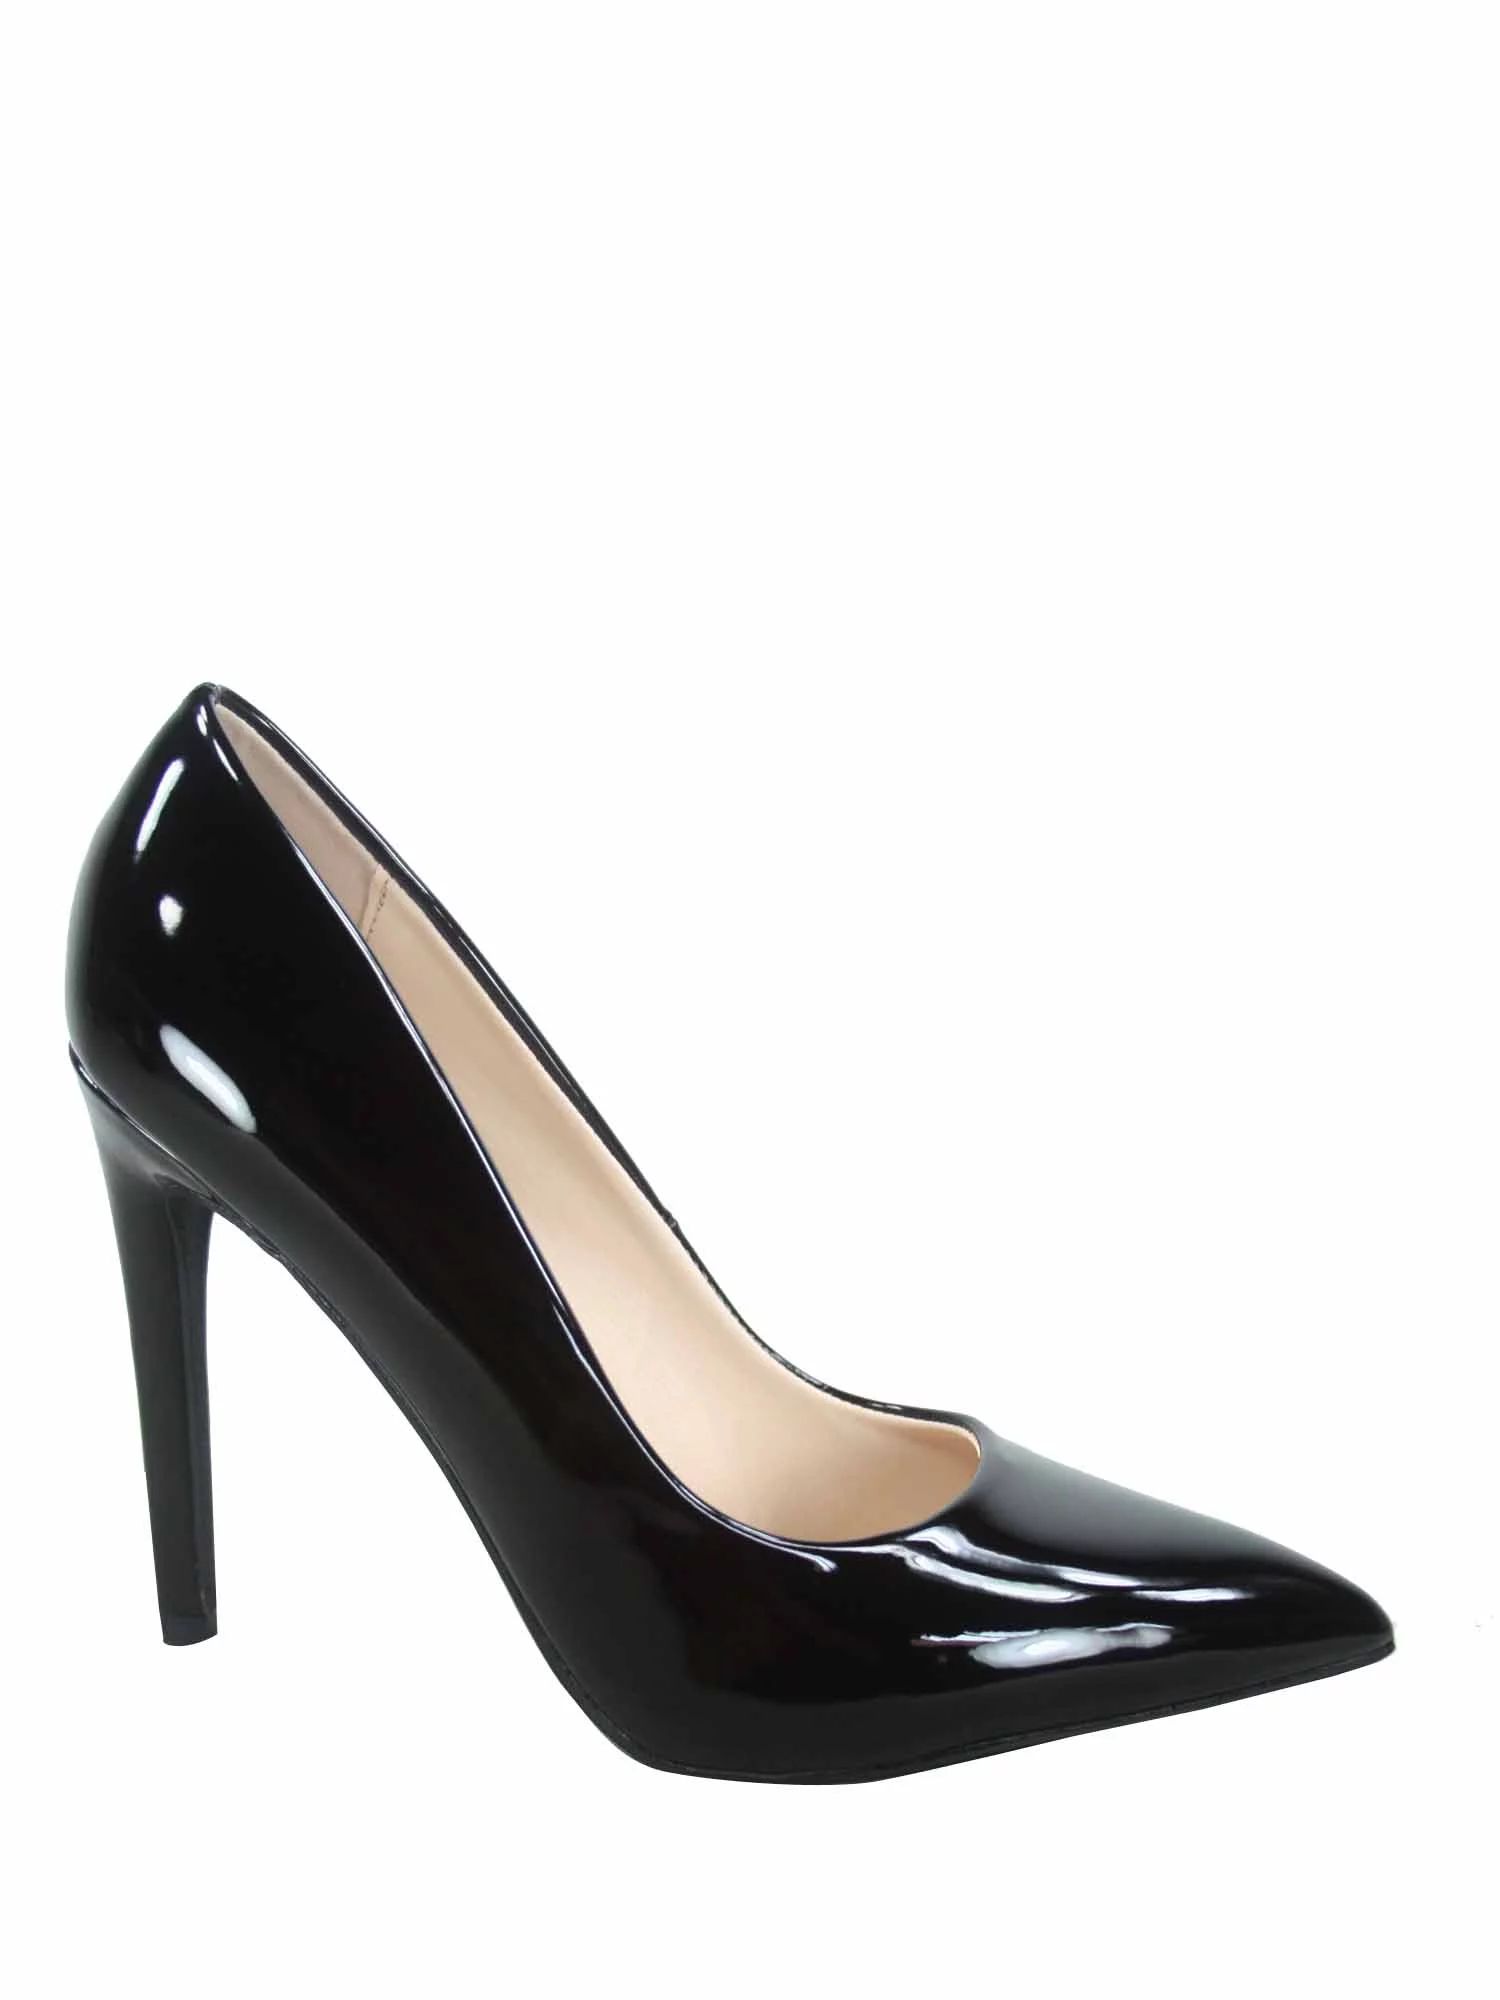 Scheme Women's Classic Slip On Pointy Toe Stiletto High Heel Pumps Shoes ( Black, 10 ) | Walmart (US)